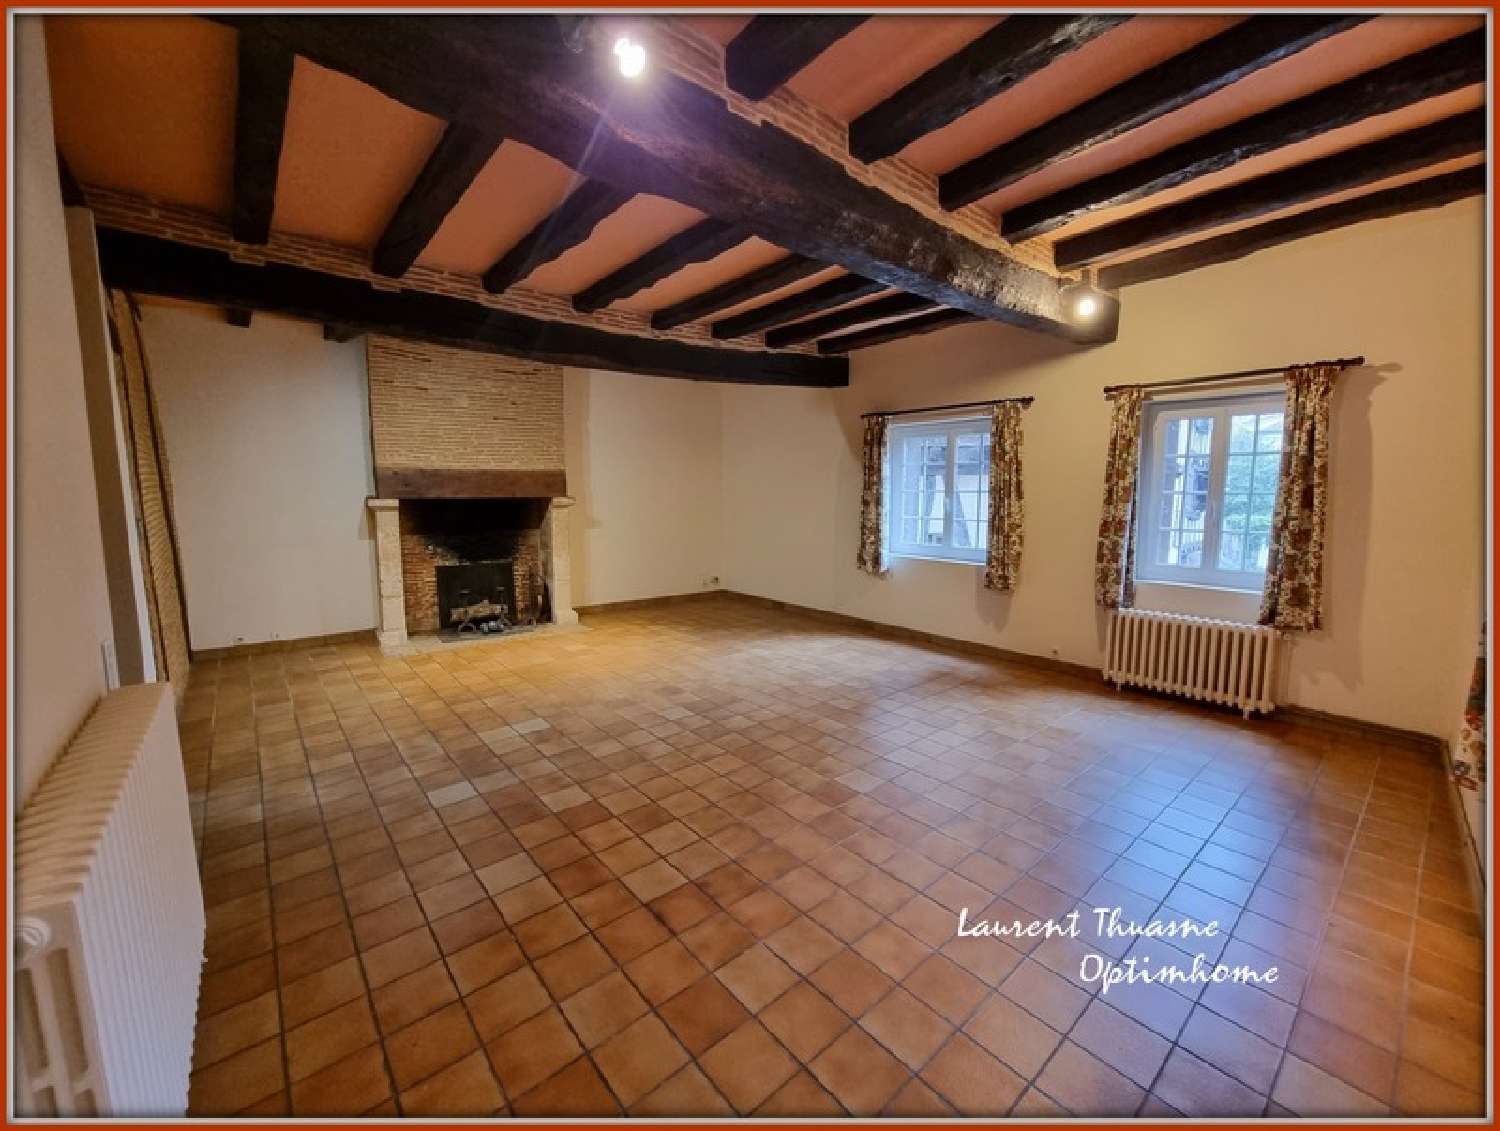  à vendre maison Bergerac Dordogne 7